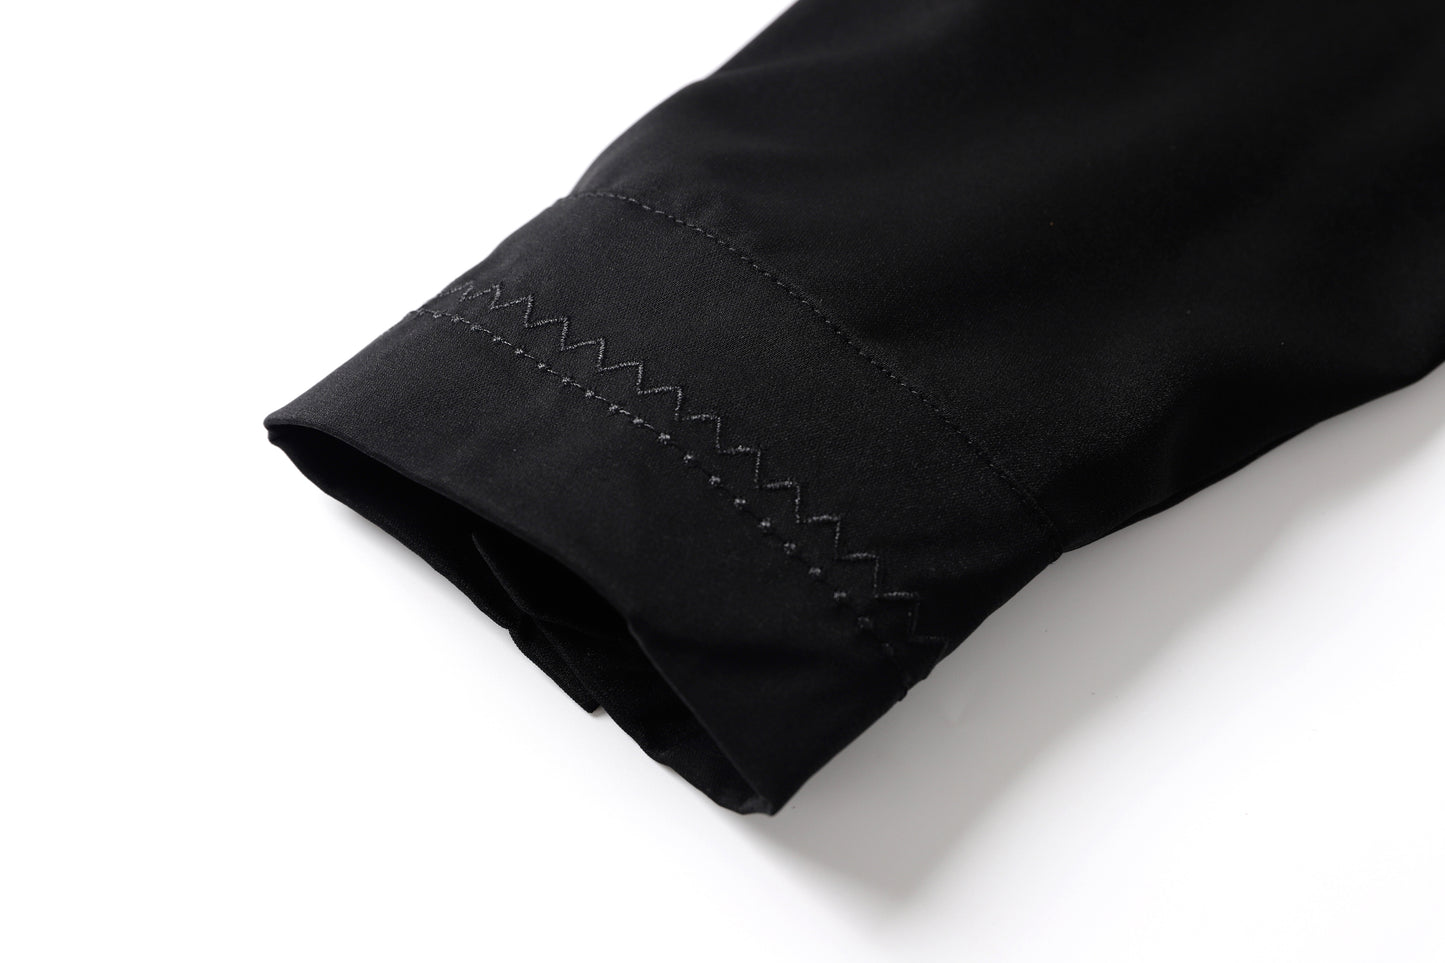 Qamis - Emirati Black with tie embroidery